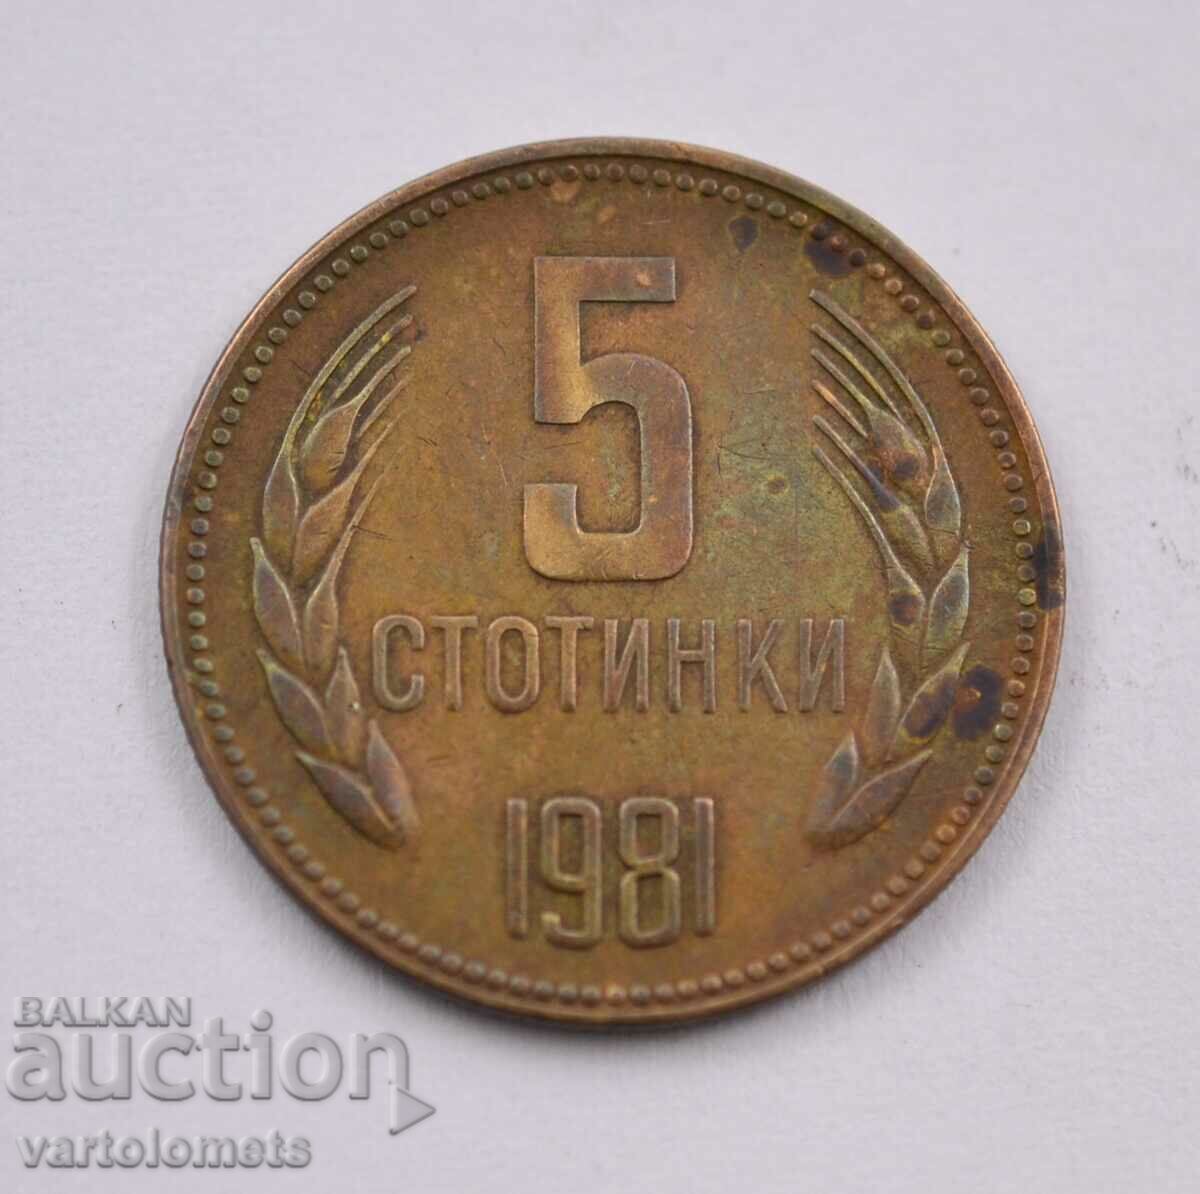 5 cents 1981 - Βουλγαρία